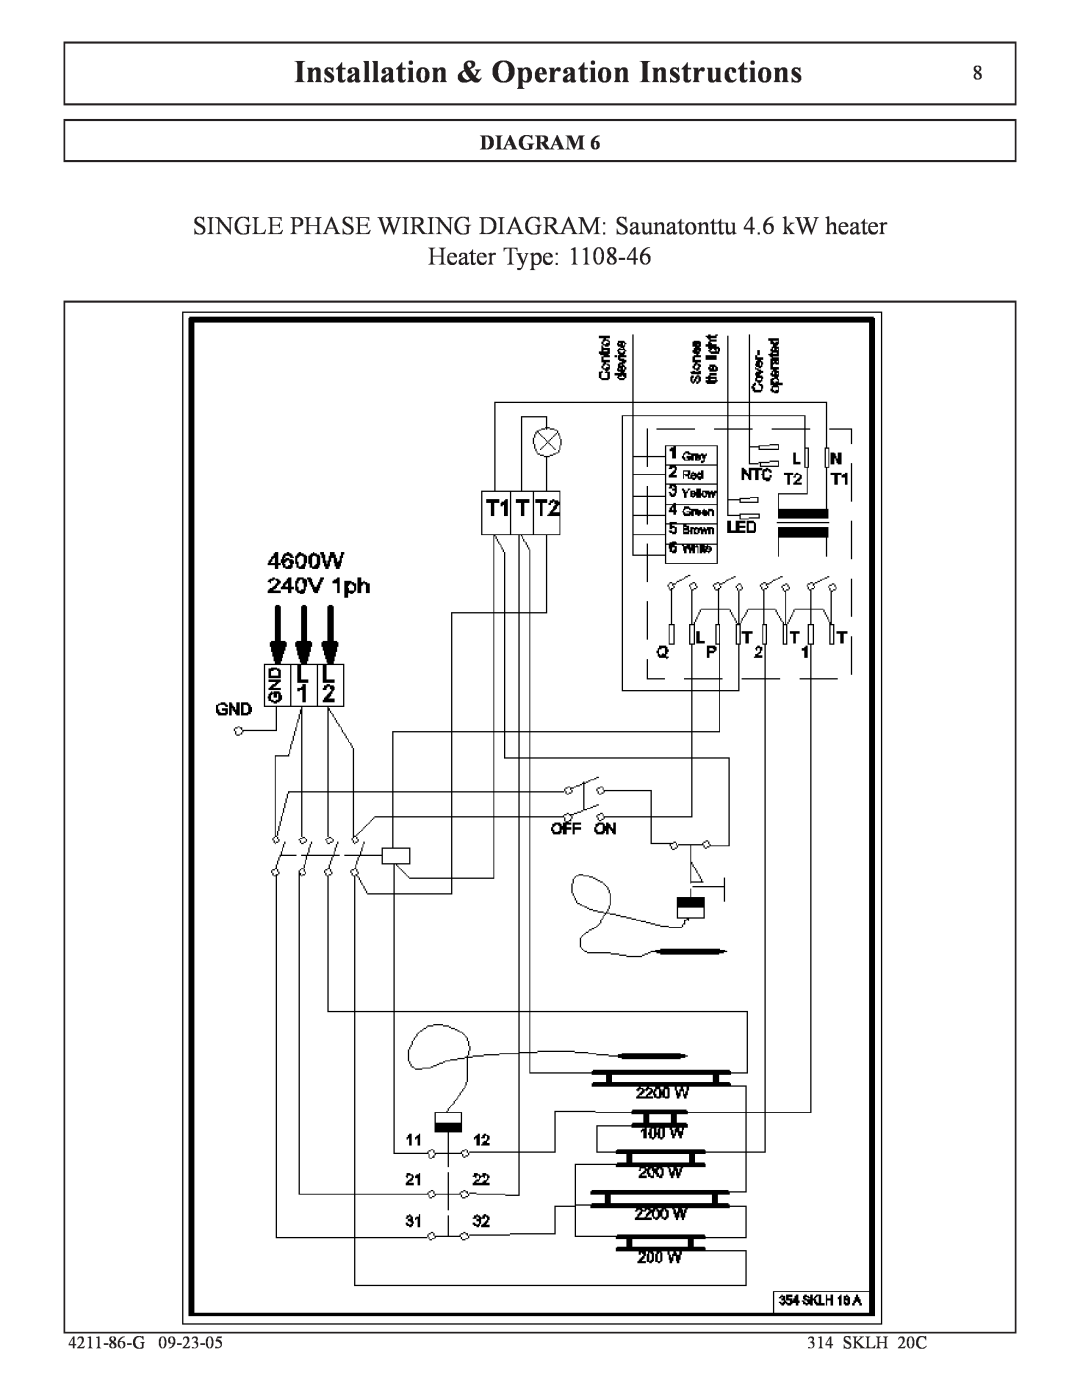 Saunatec 1108-46, 1108-60, 1108-24 manual Installation & Operation Instructions, Heater Type, Diagram 